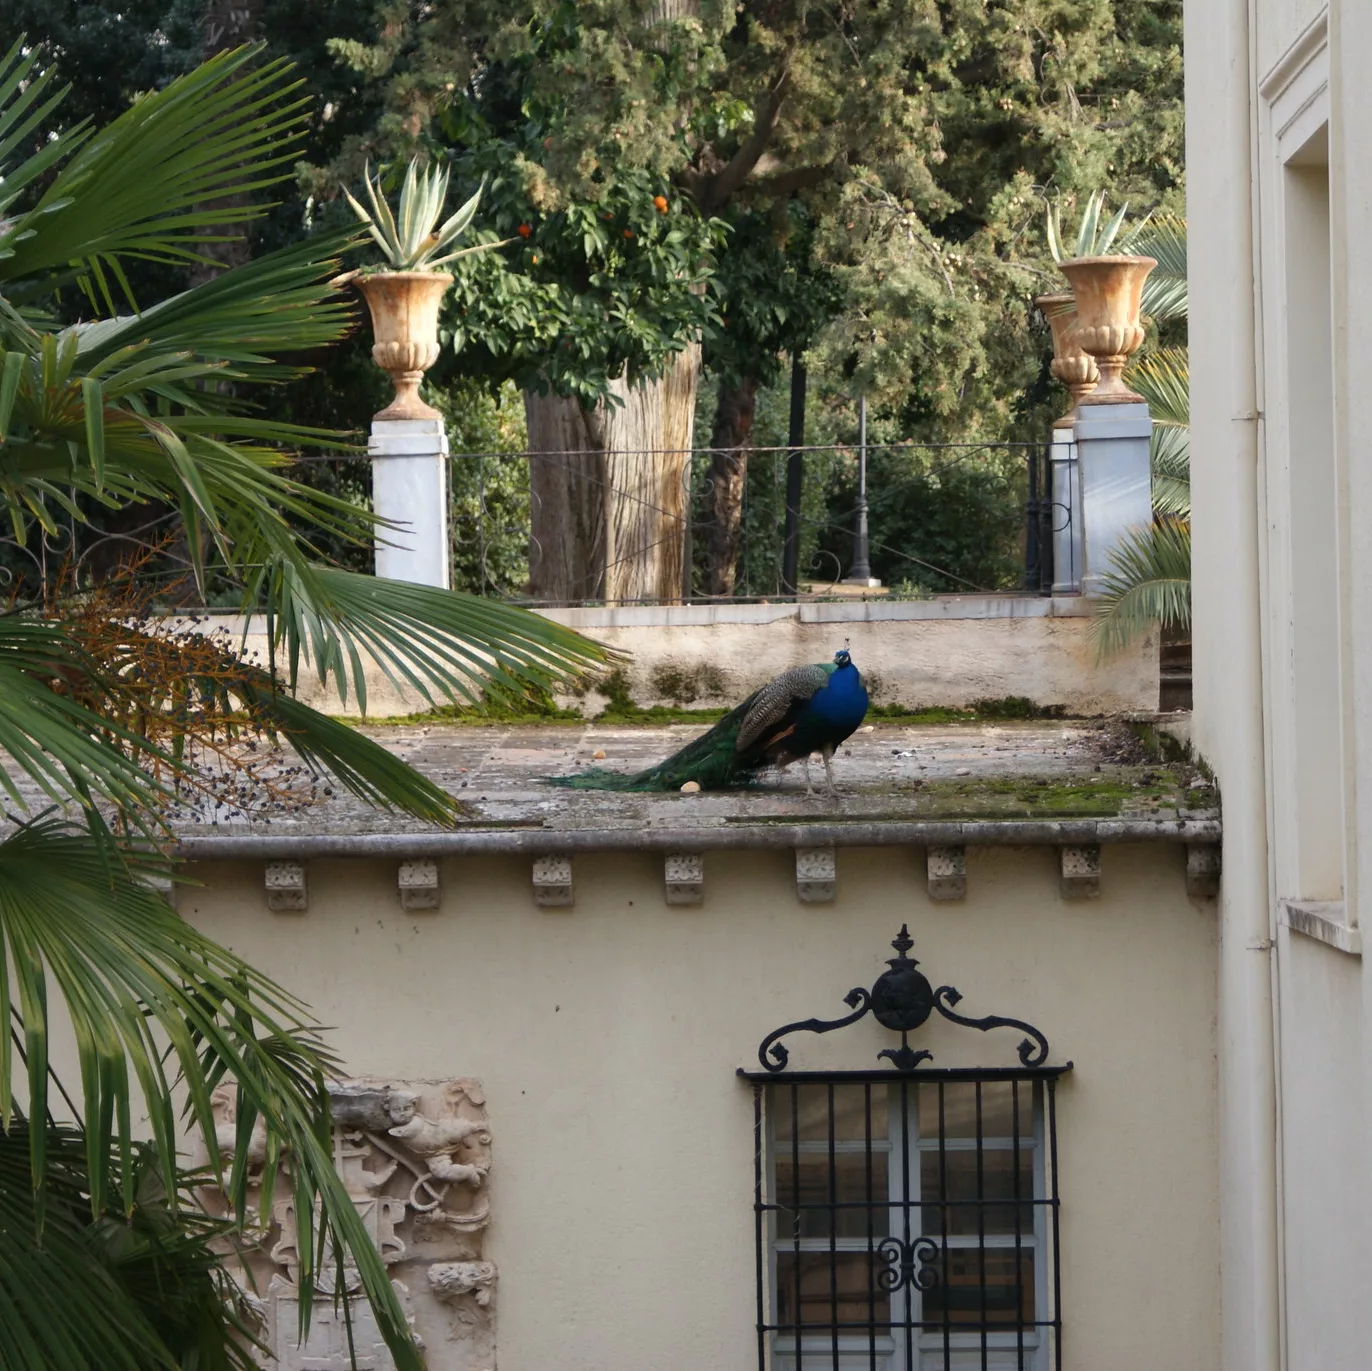 Peacock in the Gardens of Granada